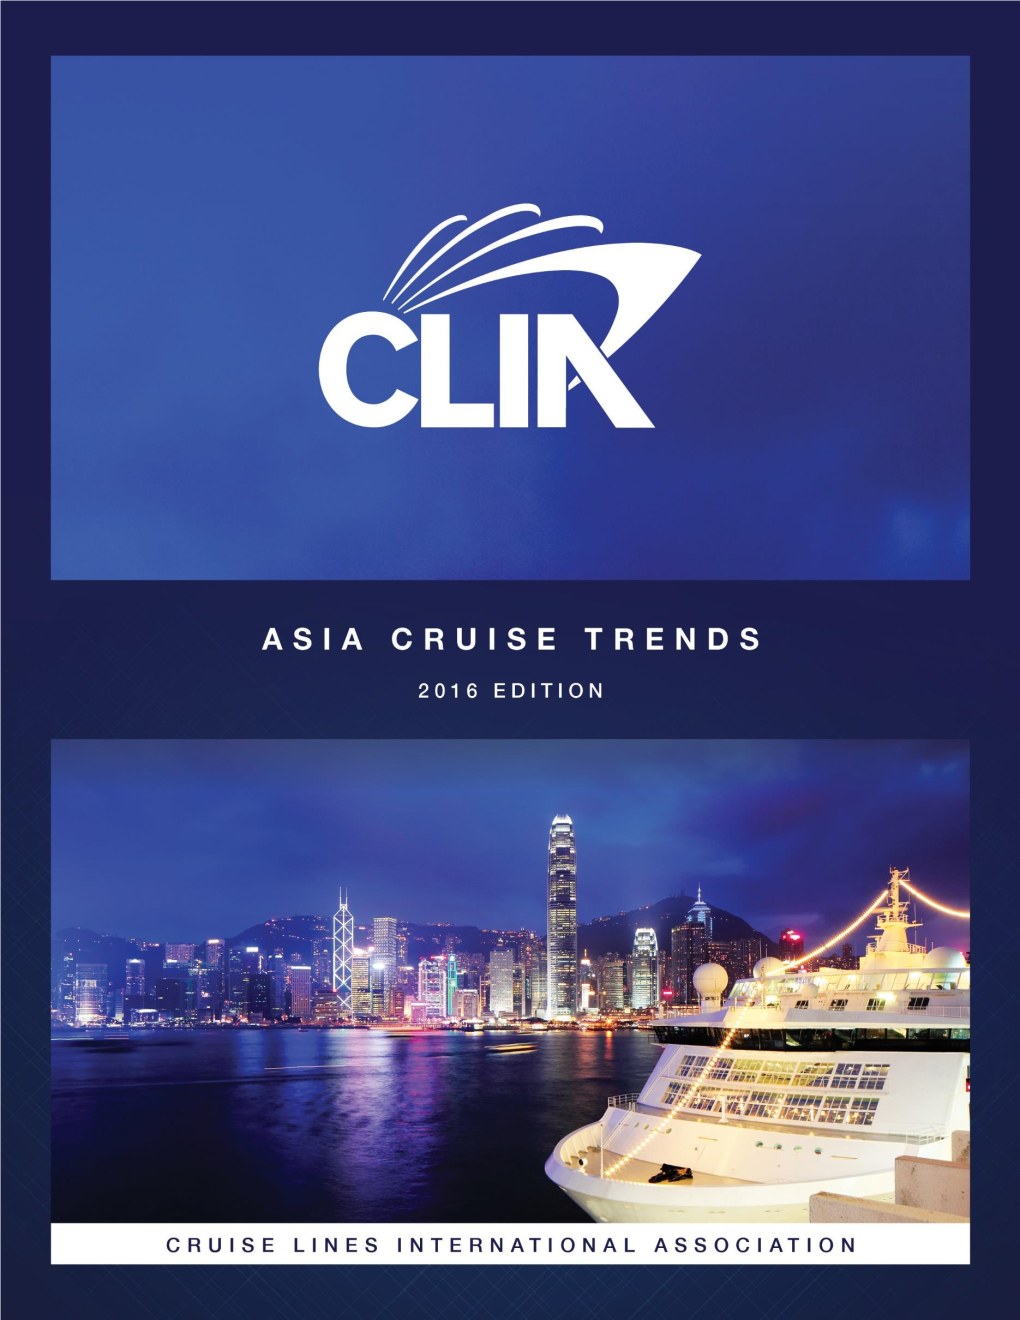 Asia Cruise Trends, 2014